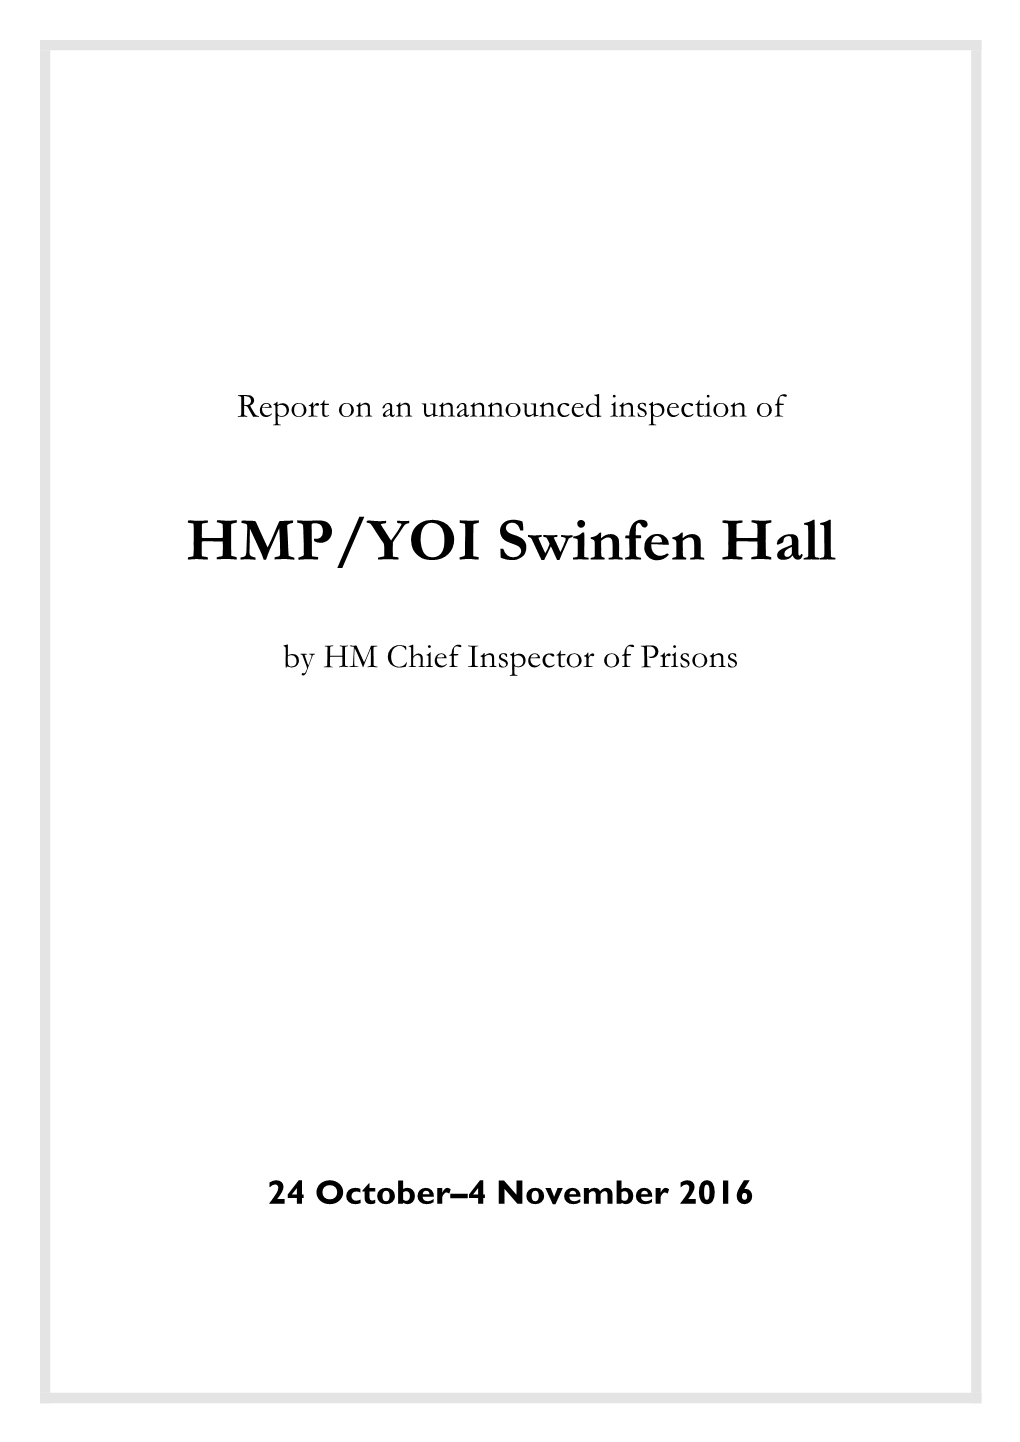 HMP/YOI Swinfen Hall